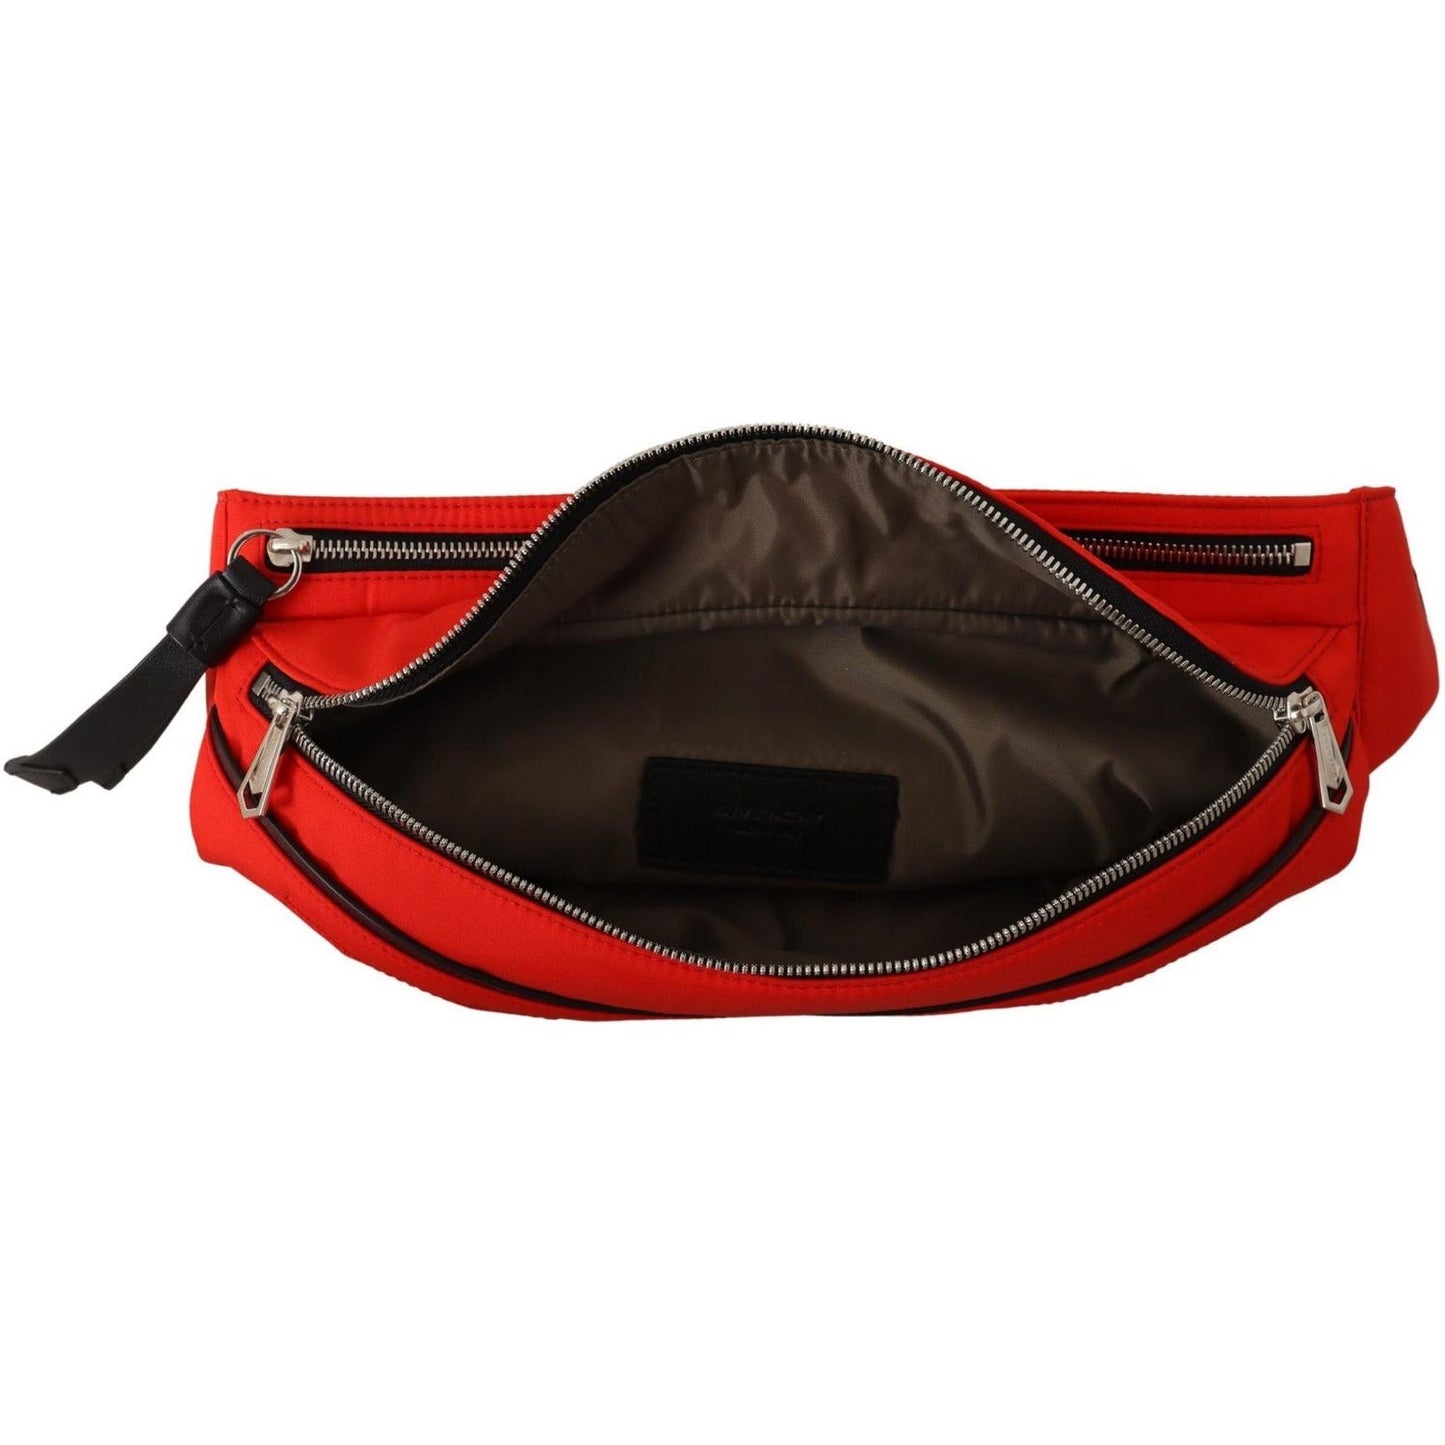 Givenchy Elegant Large Bum Belt Bag in Red and Black red-polyamide-downtown-large-bum-belt-bag BELT BAG IMG_7642-scaled-80496867-079.jpg